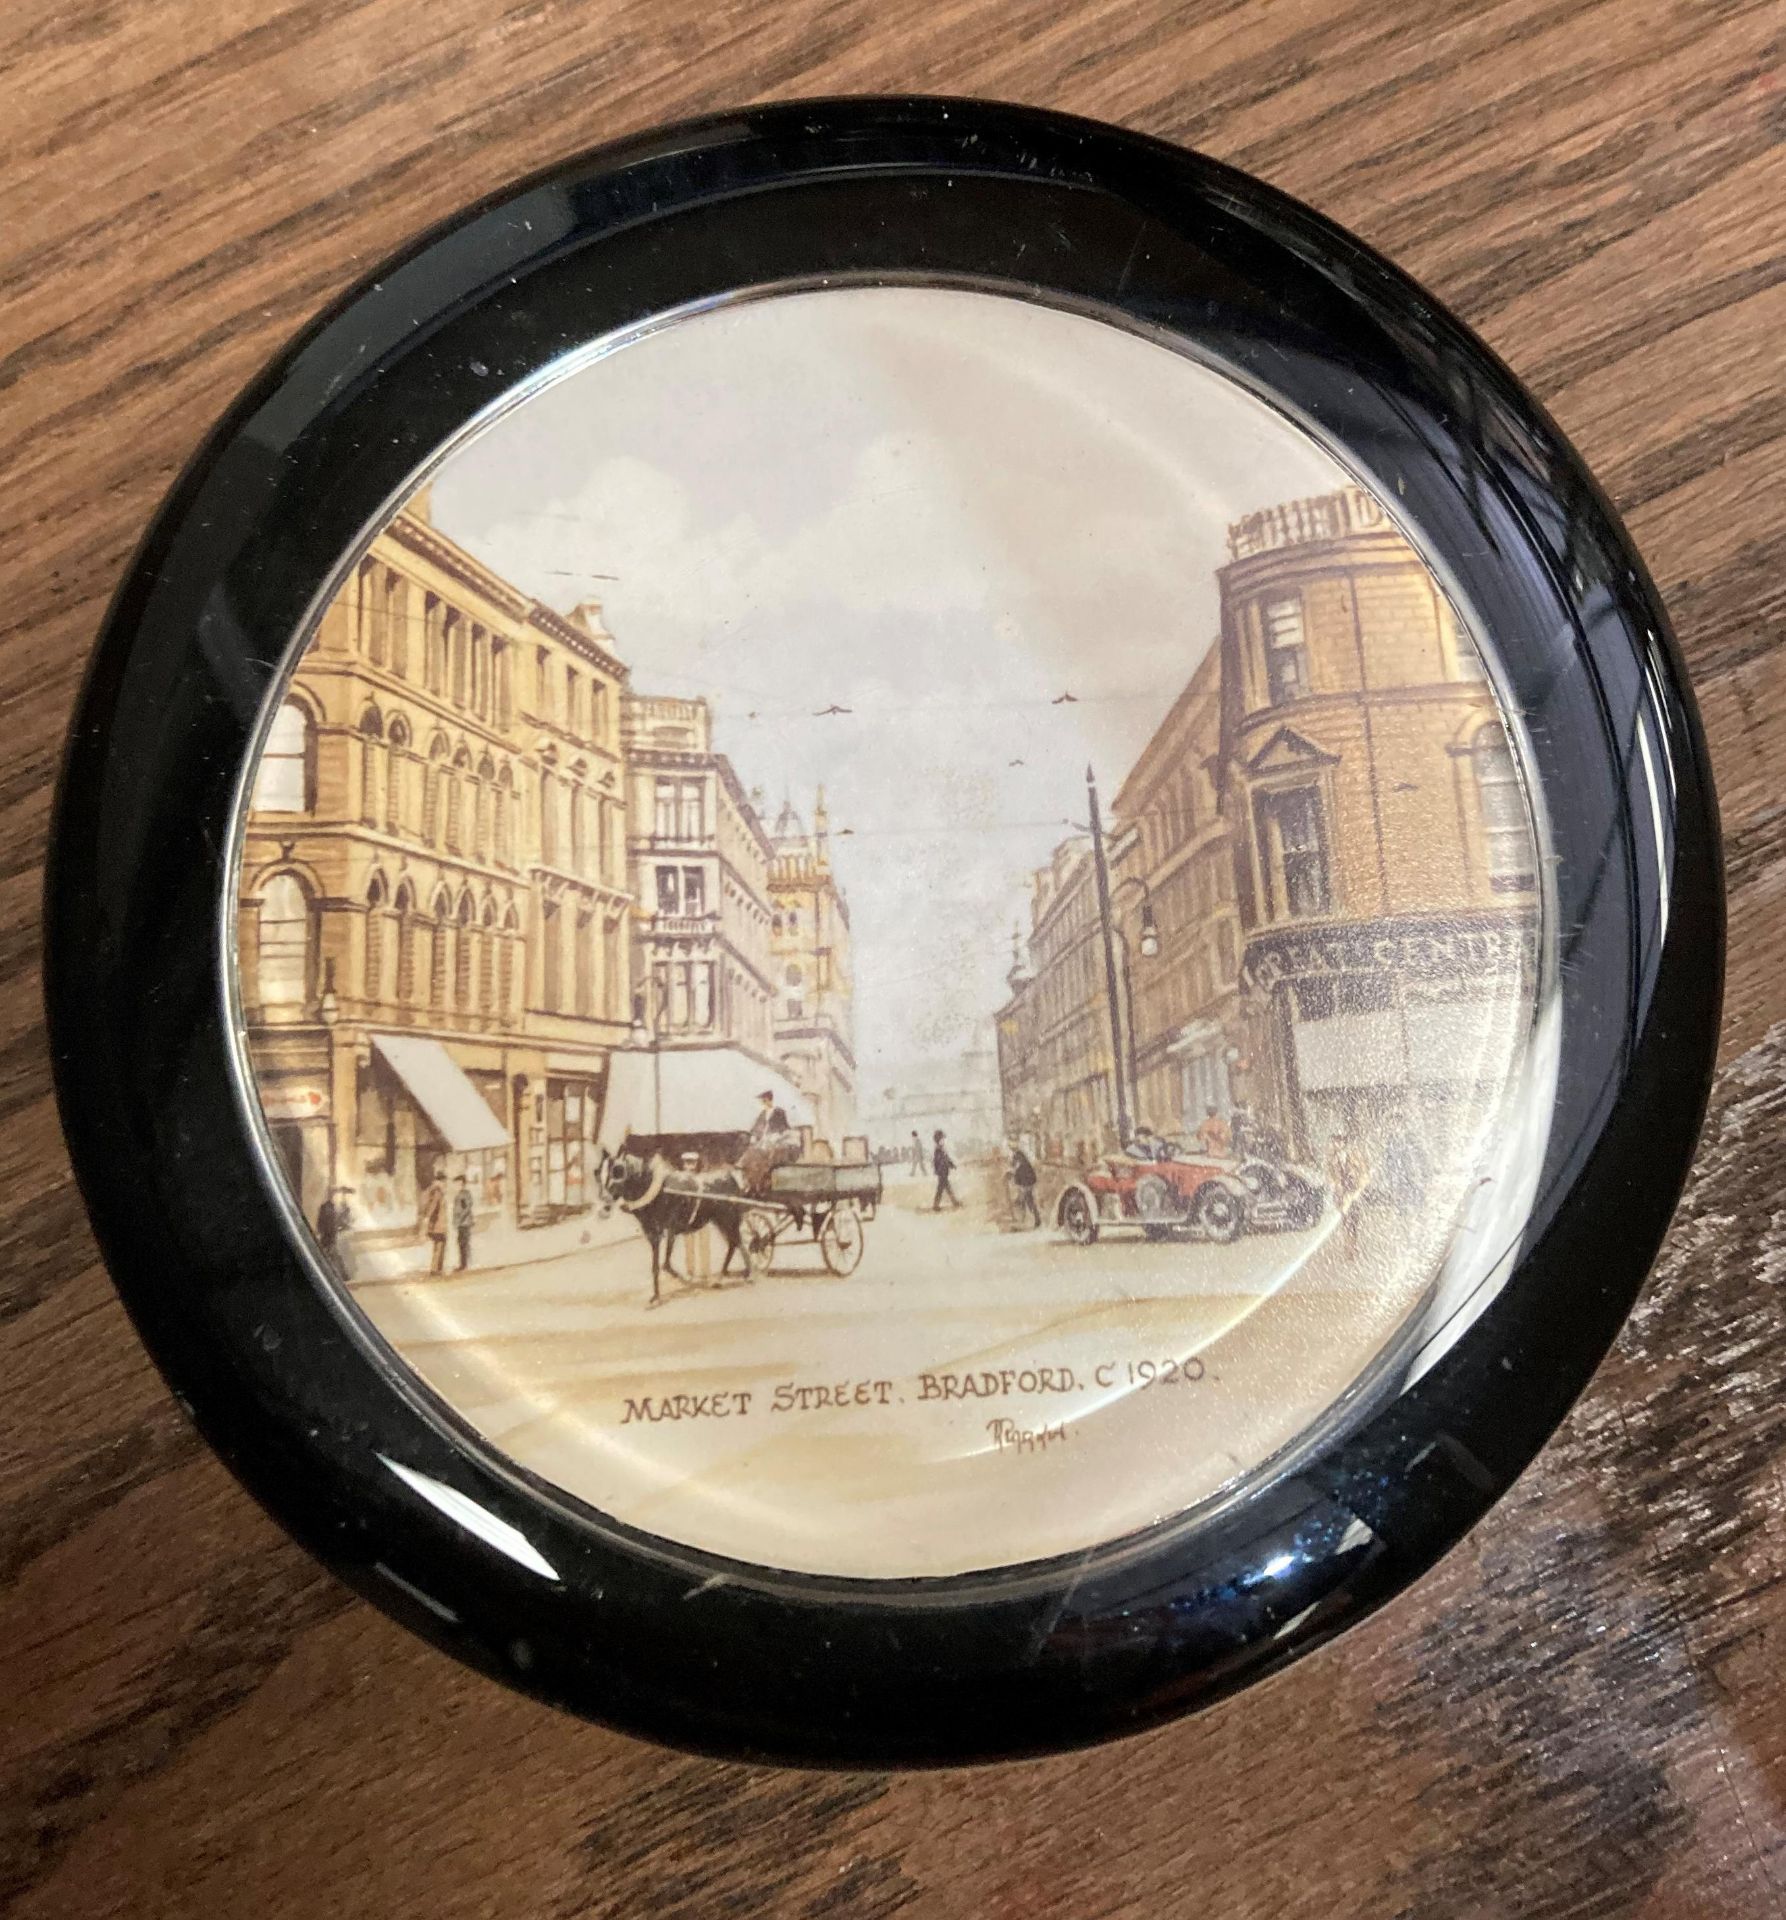 A paperweight depicting Market Street, Bradford circa 1920.